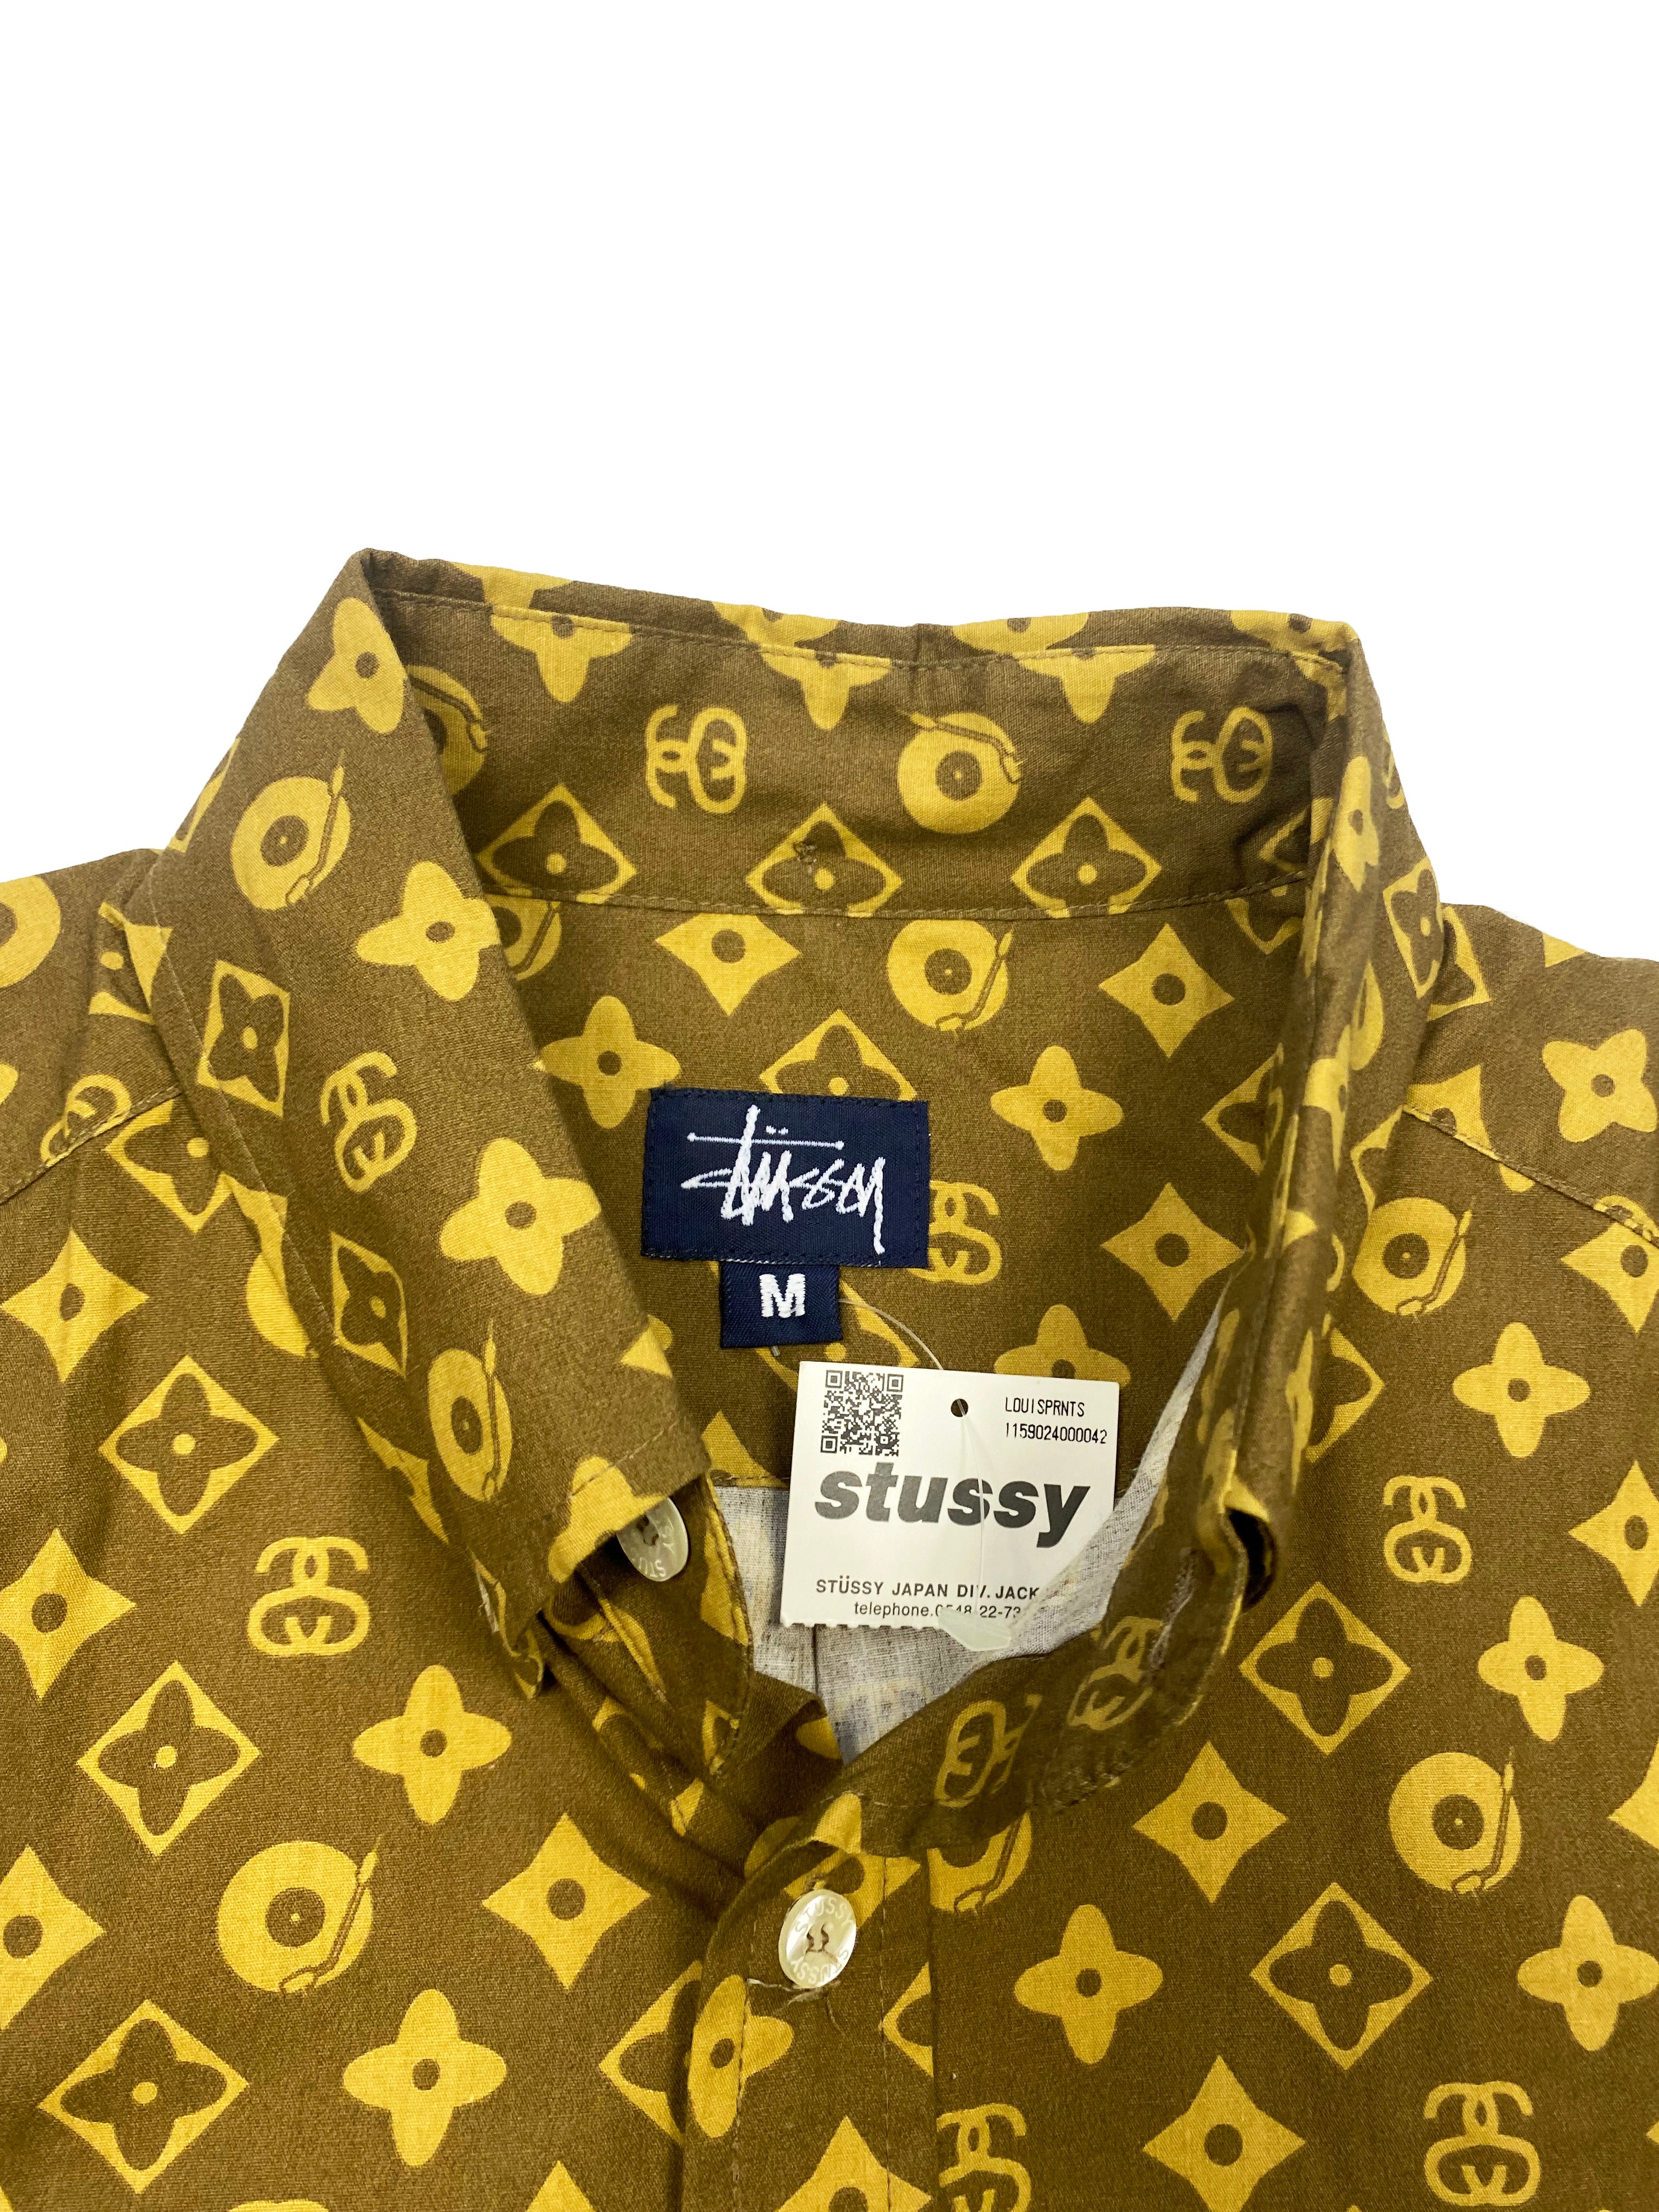 Brown Stussy Louis Vuitton Shirt, Size Large, Baggy